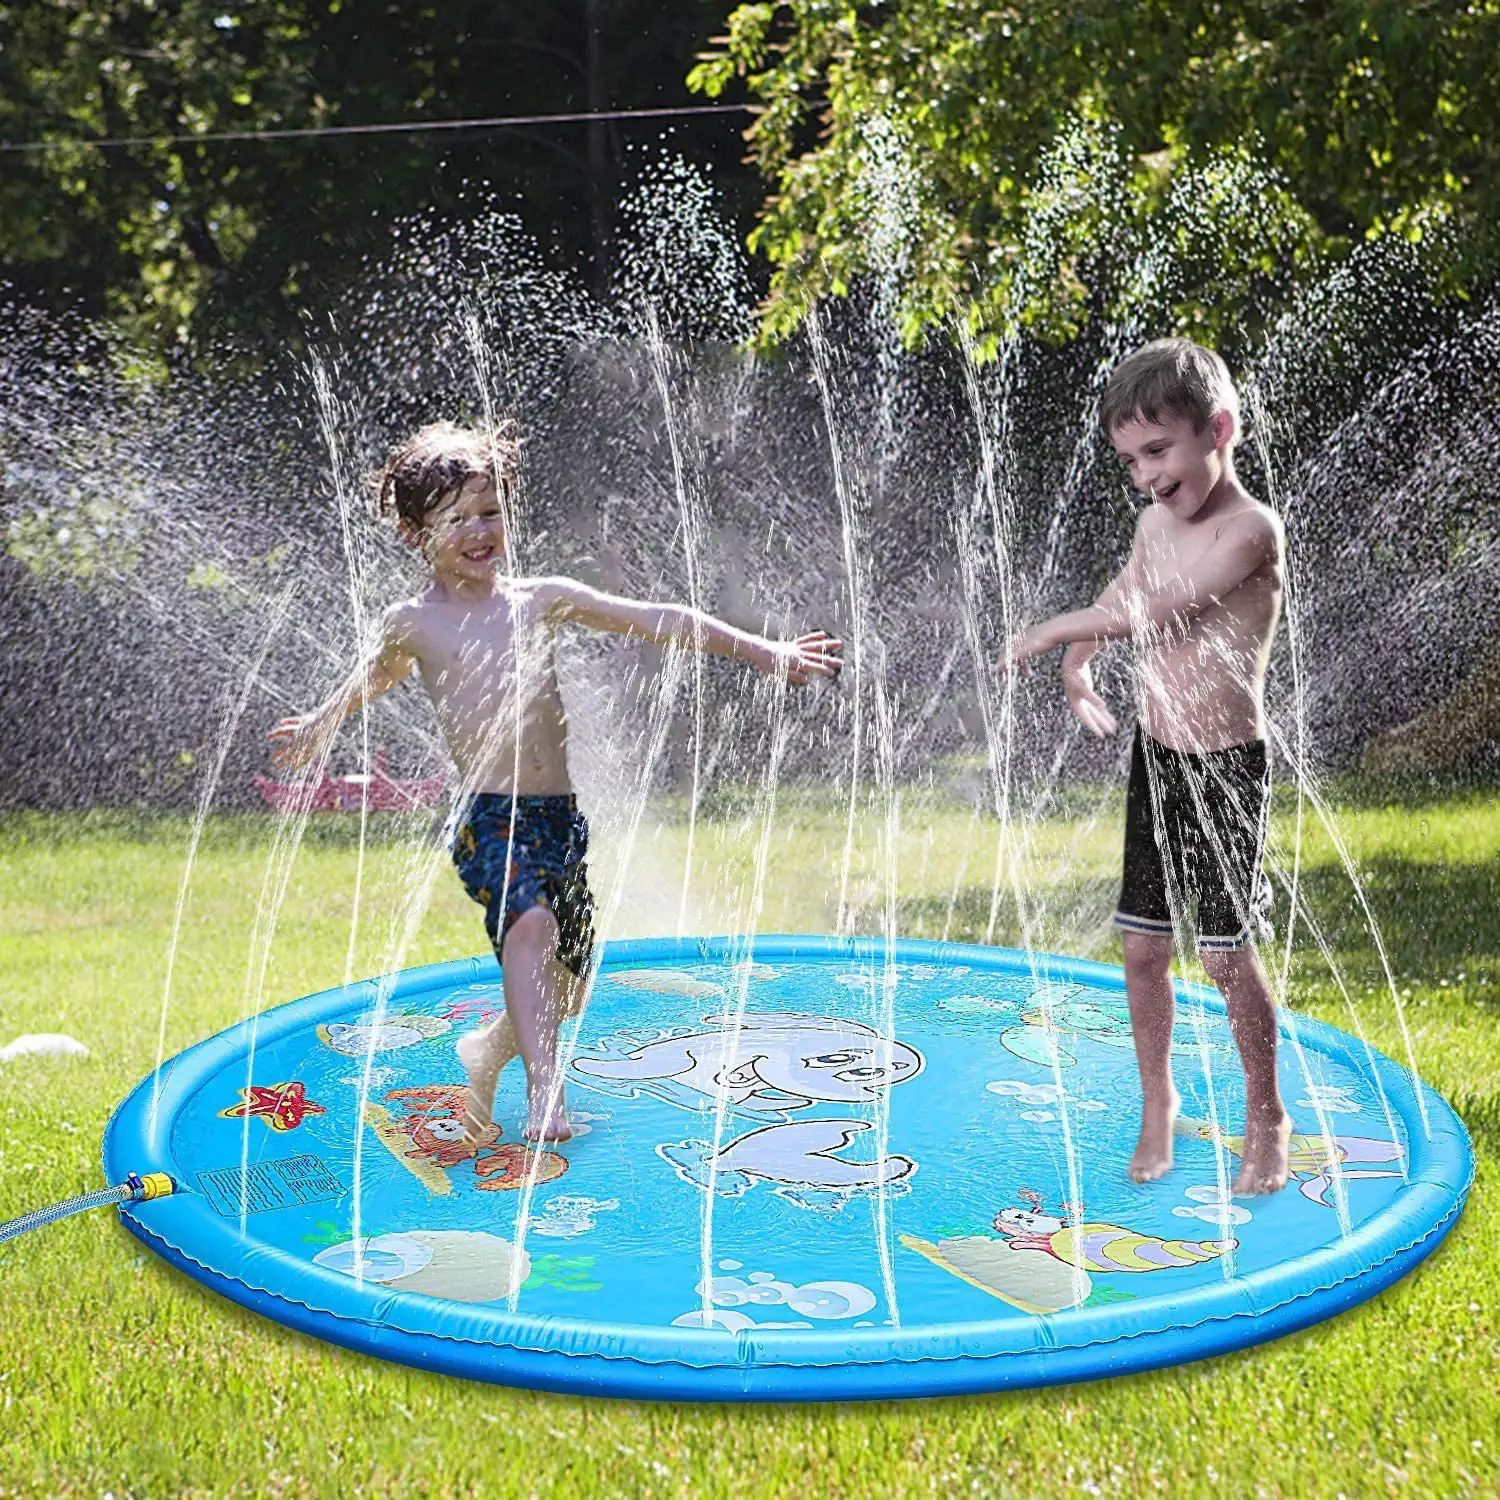 Splash Pad. Juguete inflable con aspersor de agua para jugar. 150cm de diámetro. Diseño animales acuáticos.